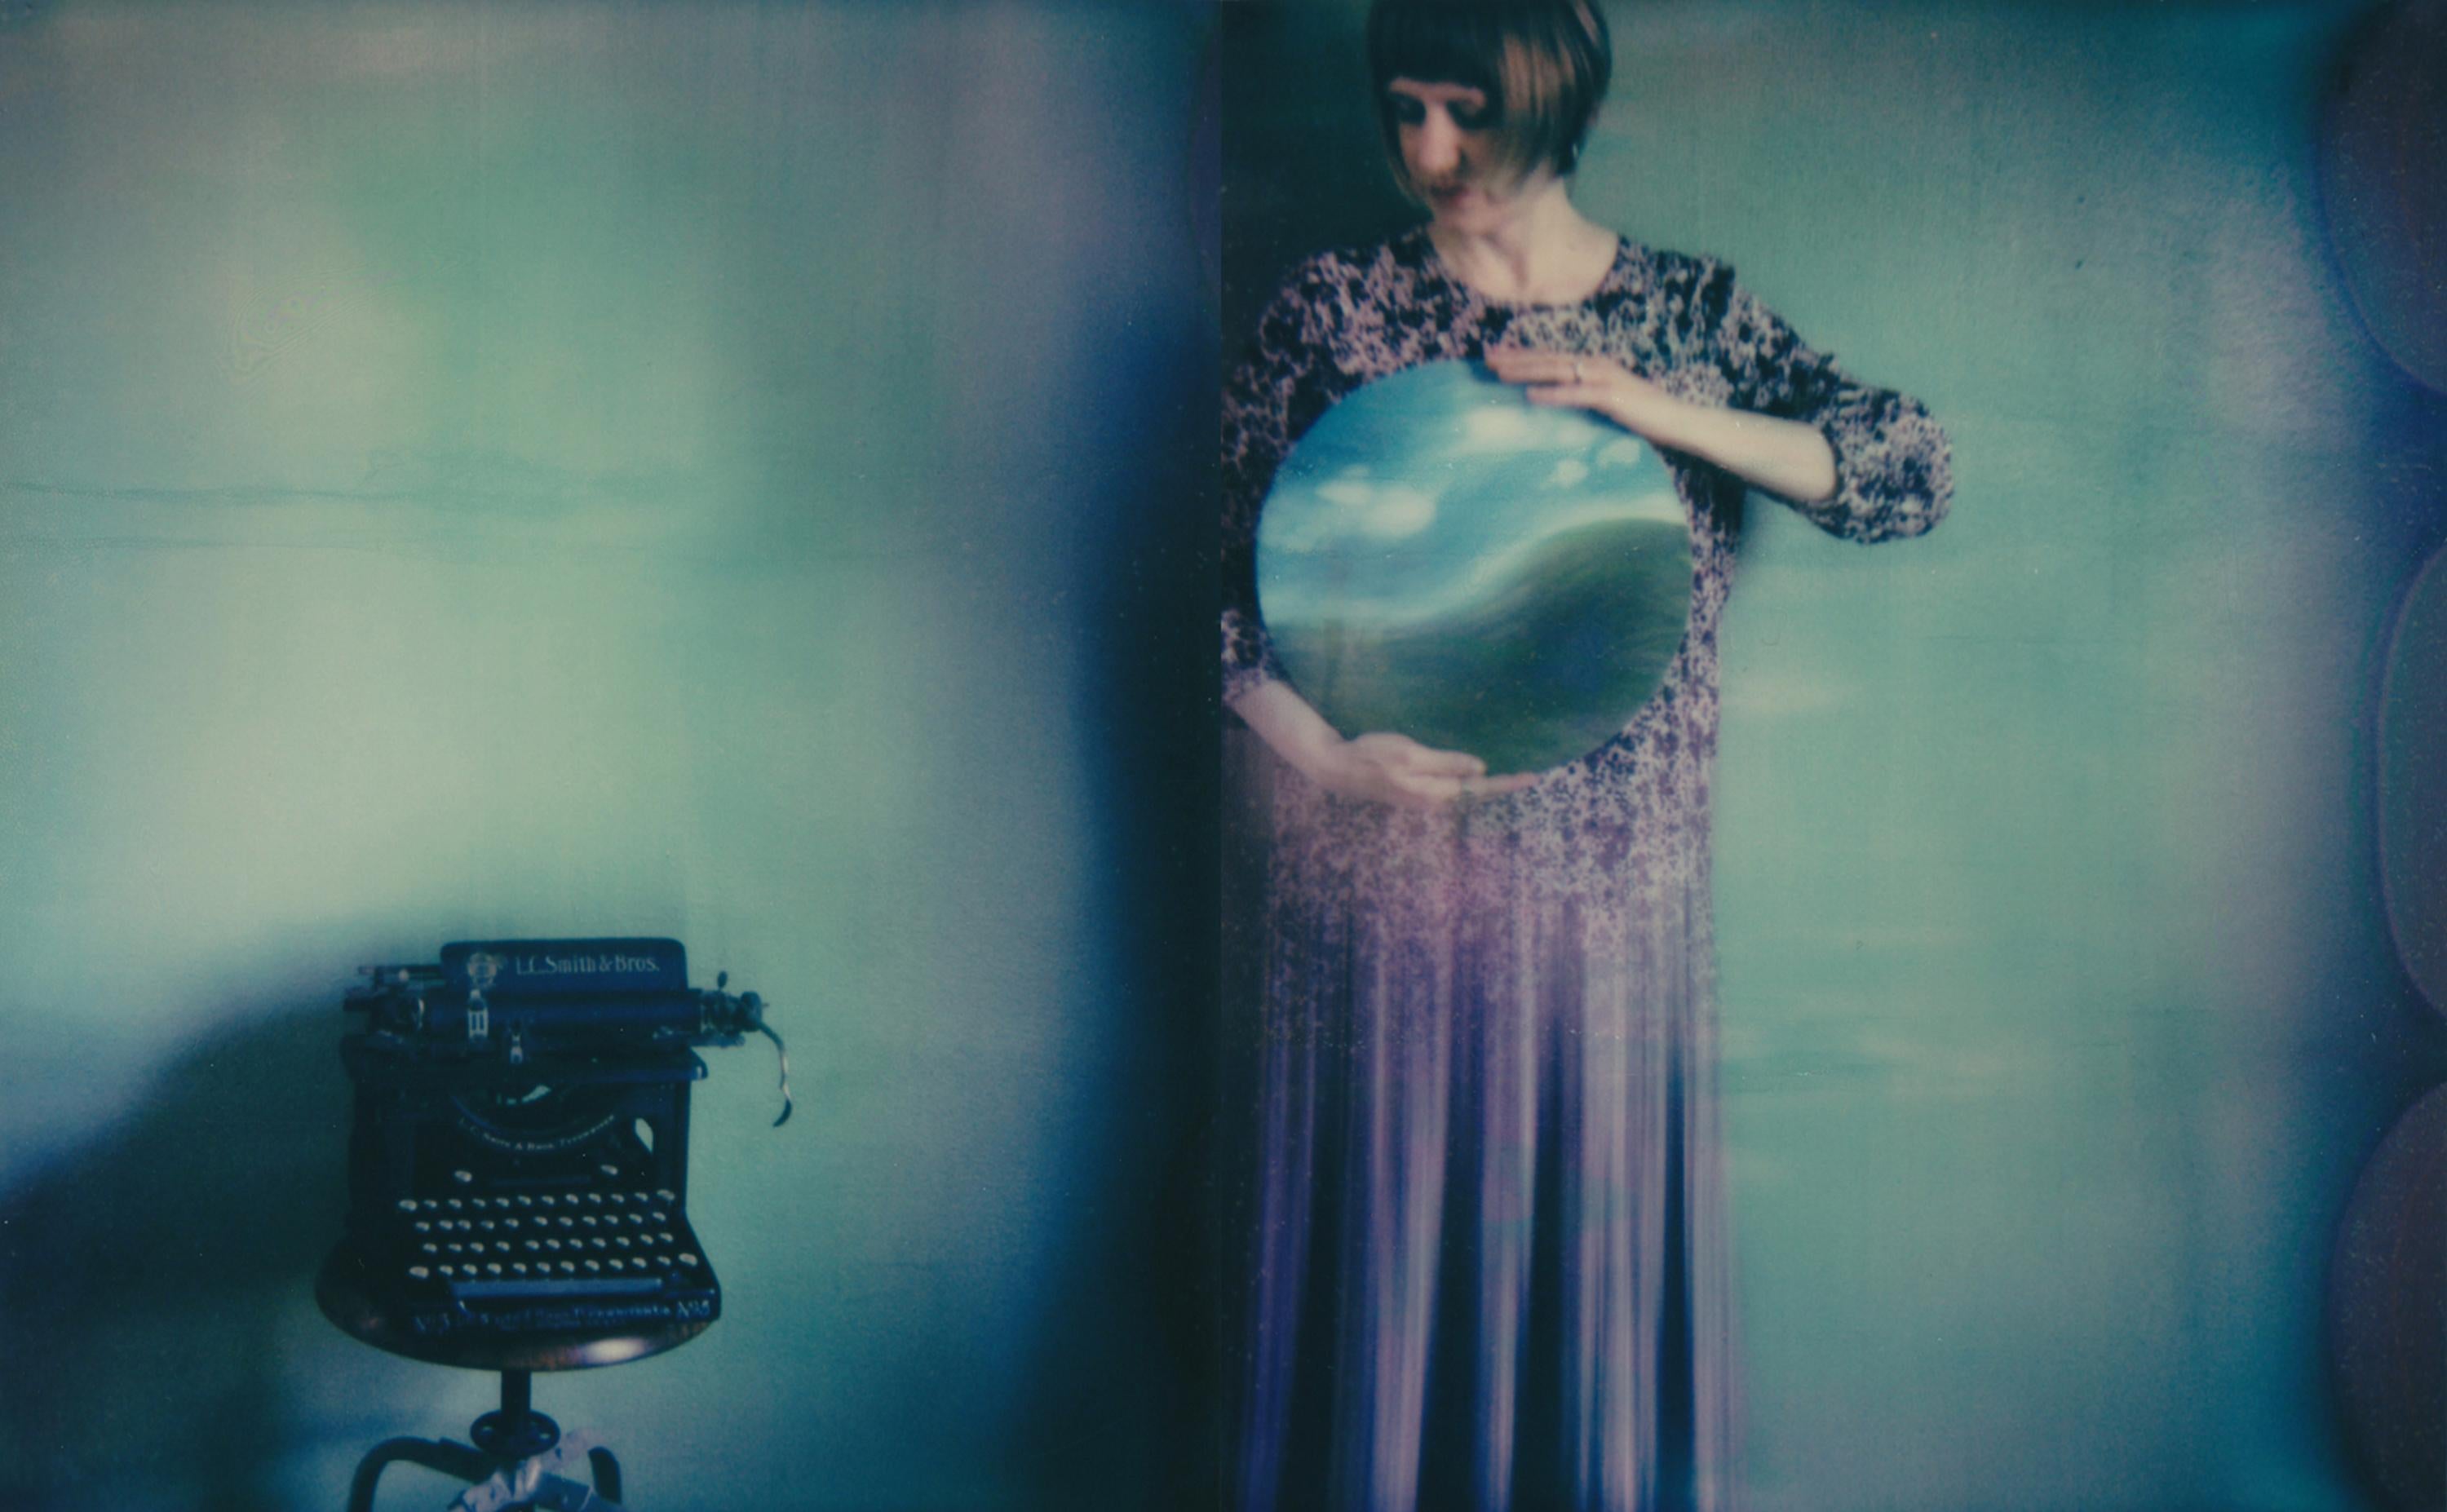 Lisa Toboz Color Photograph - Ghost Story - Contemporary, Woman, Polaroid, Interior